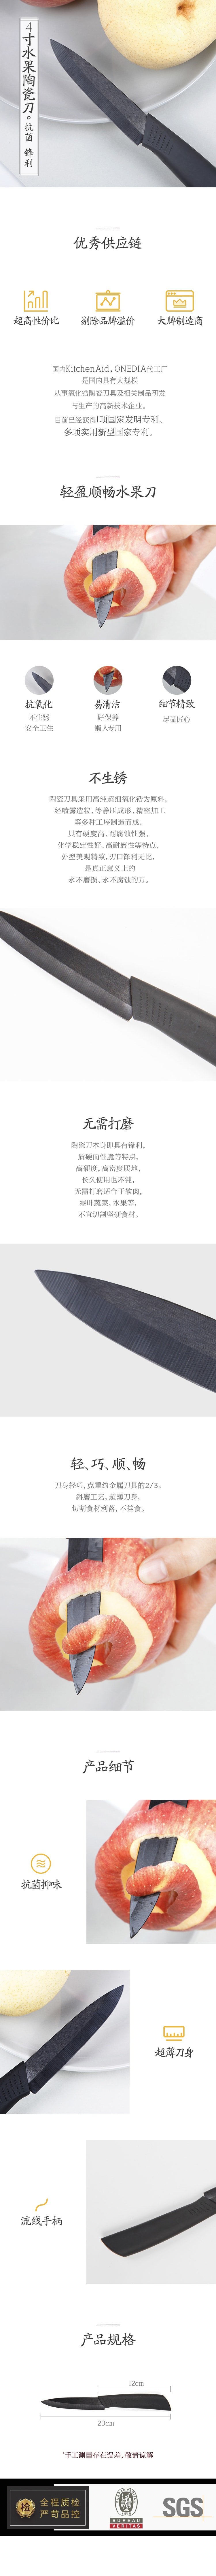 4" Ceramic Fruit Knife